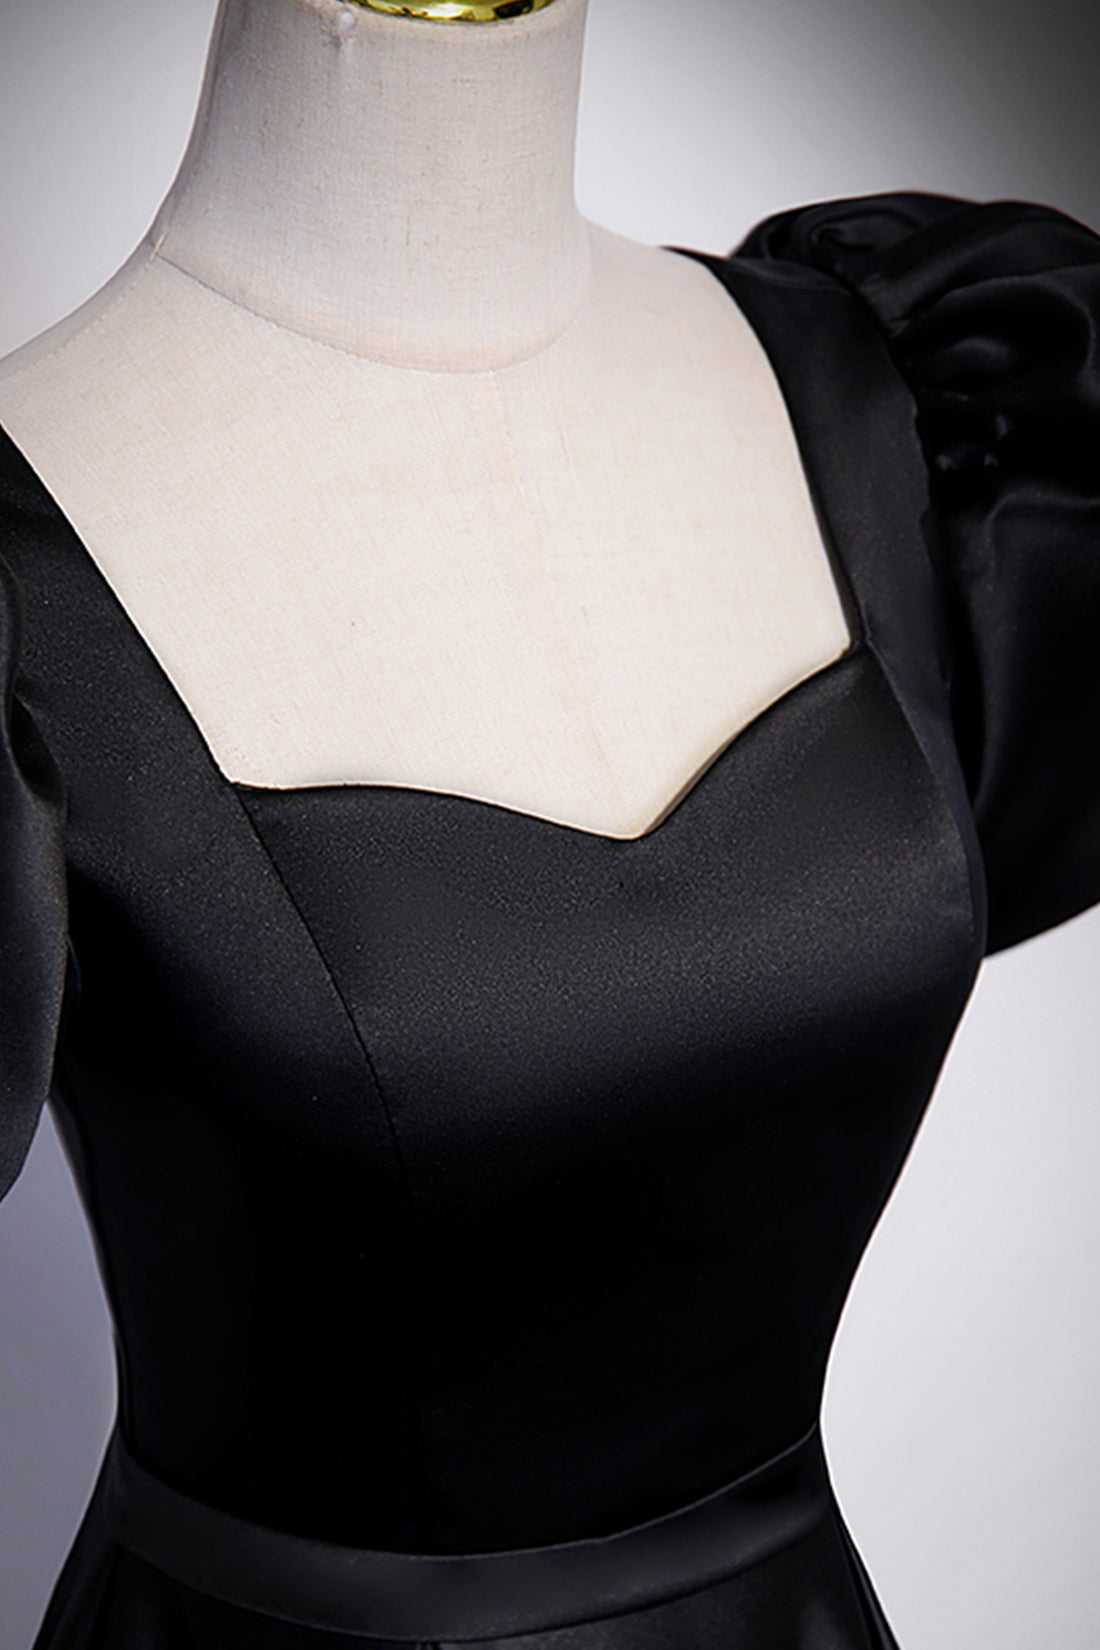 Black Satin Floor Length Prom Dress, Simple Black Short Sleeve Evening Dress